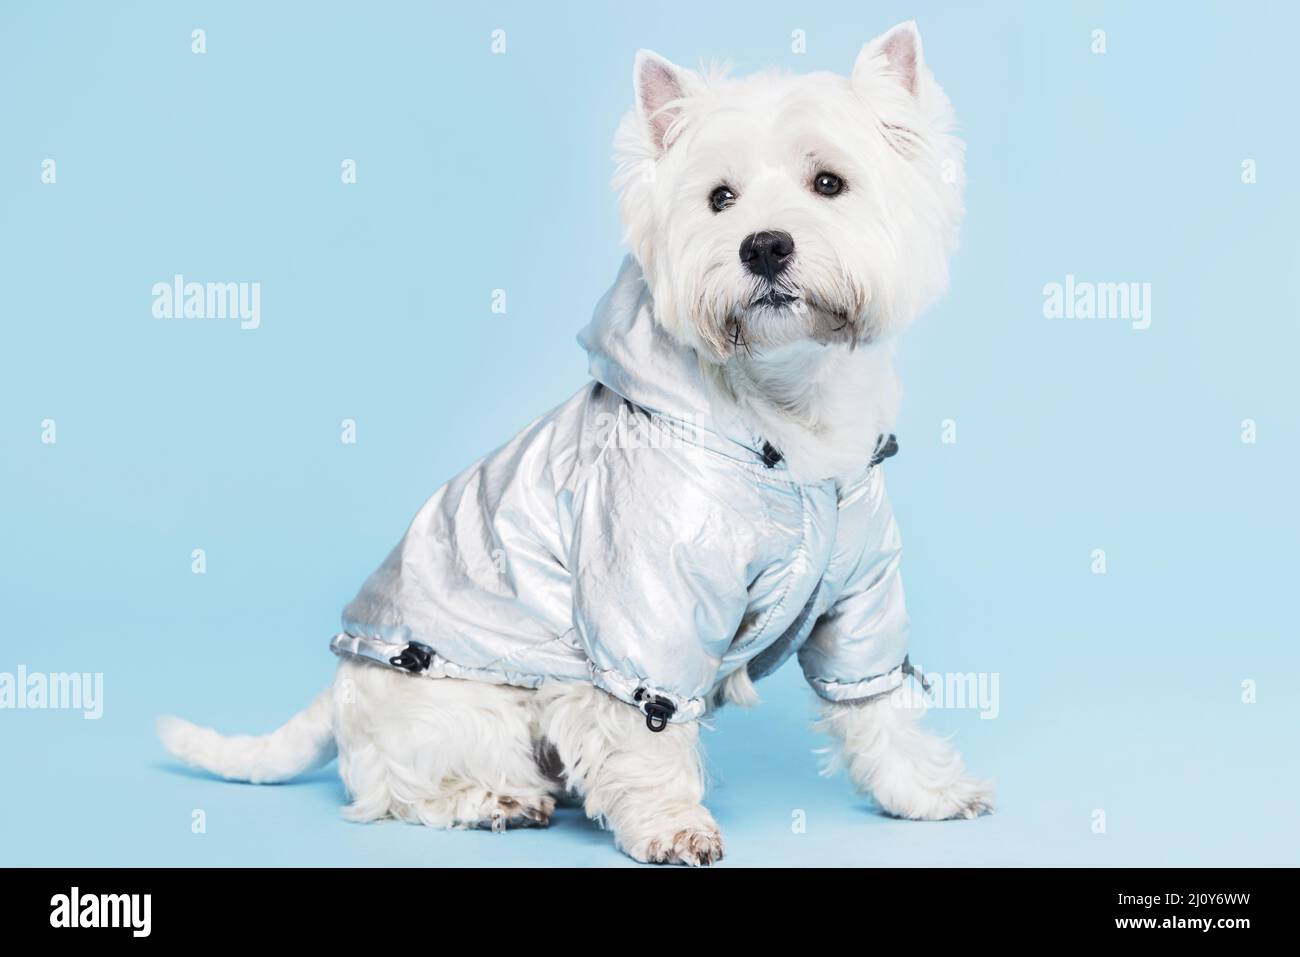 Cute little dog costume. High quality photo Stock Photo